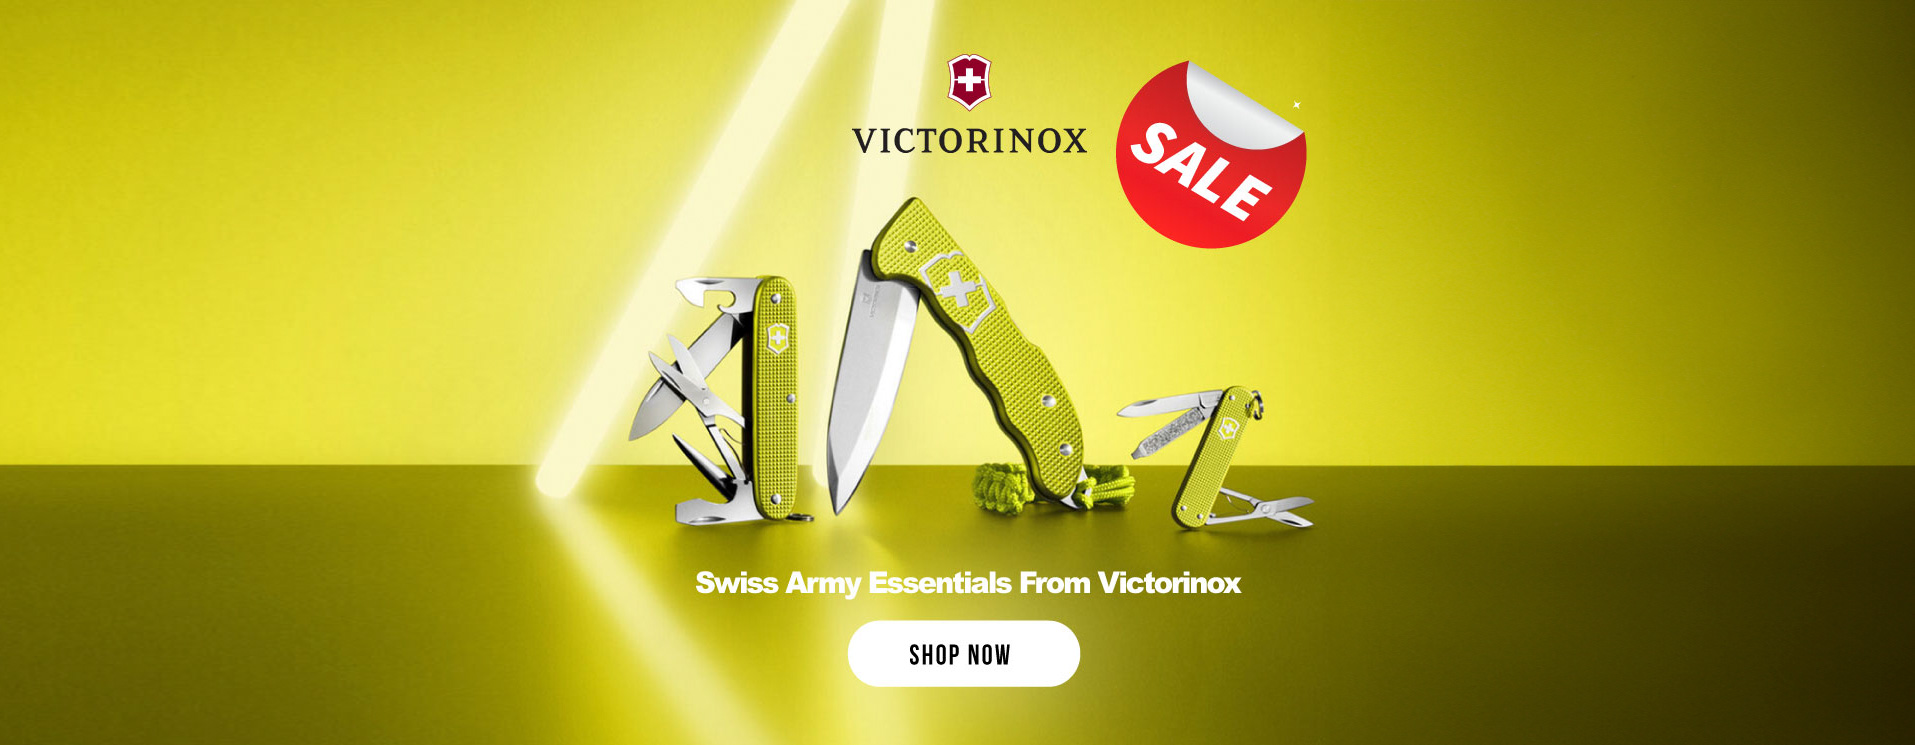 Victorinox Swiss Army Essentials Sale